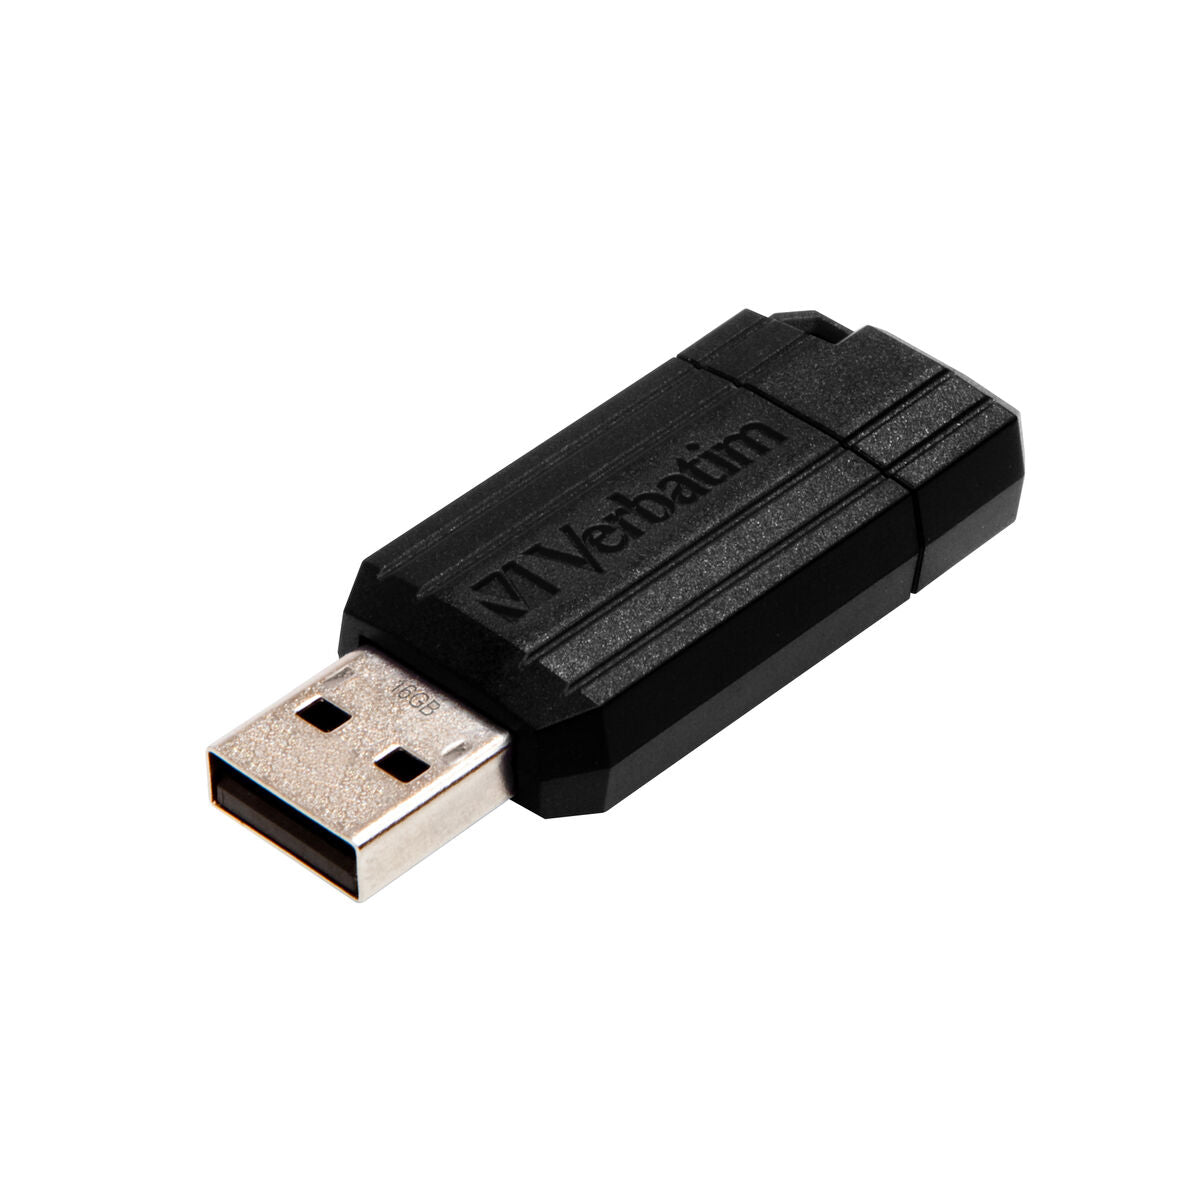 Clé USB Verbatim 49063 Porte-clés Noir